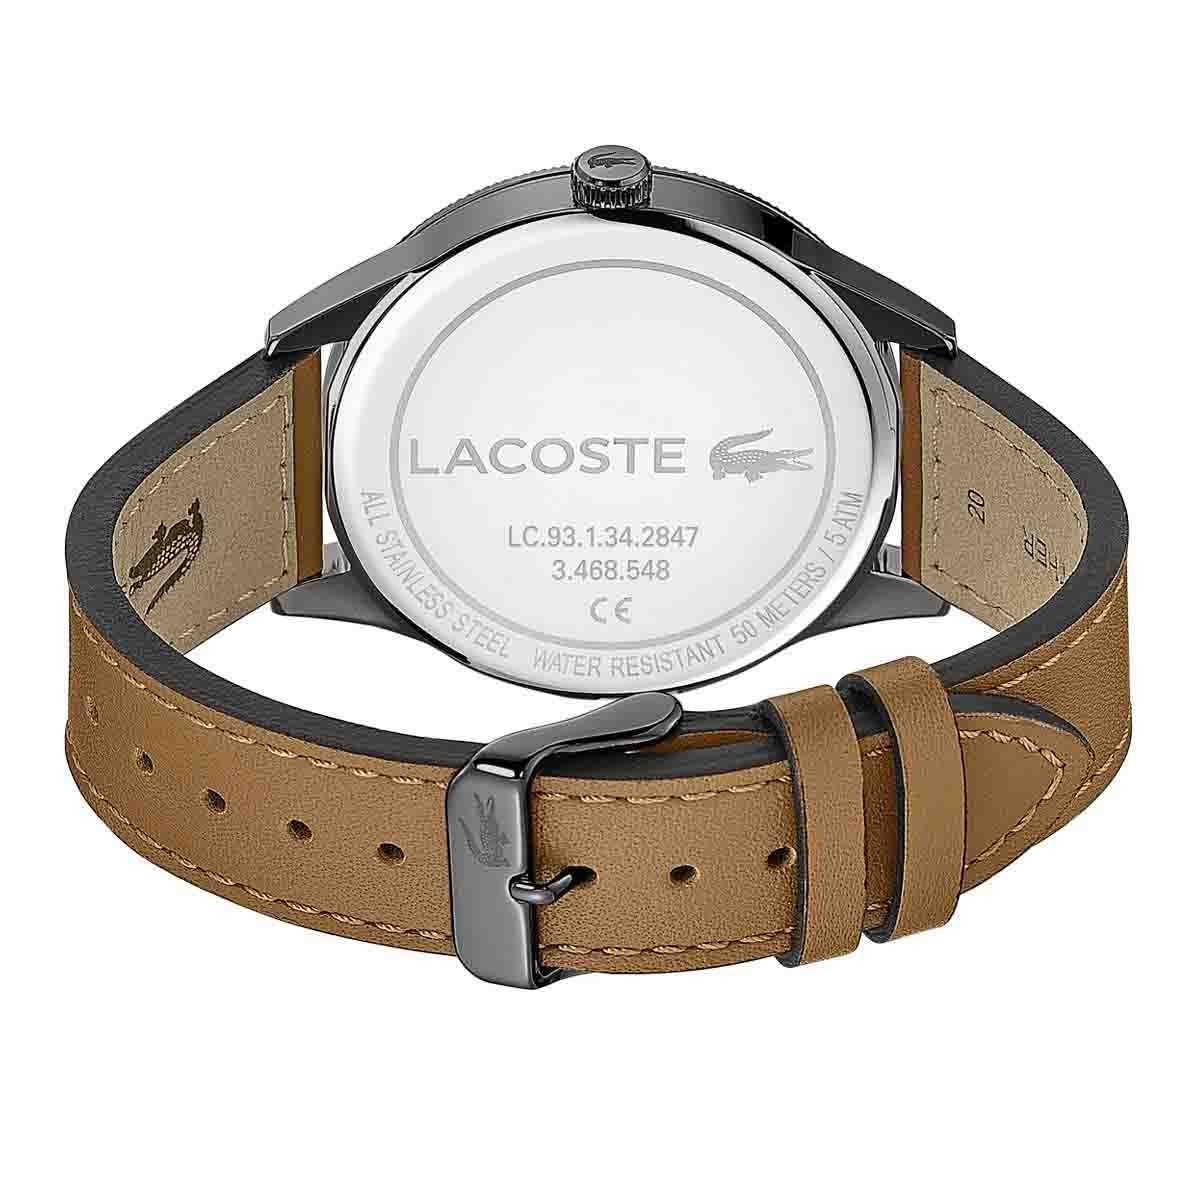 Reloj para Caballero Continental Color Café Lacoste